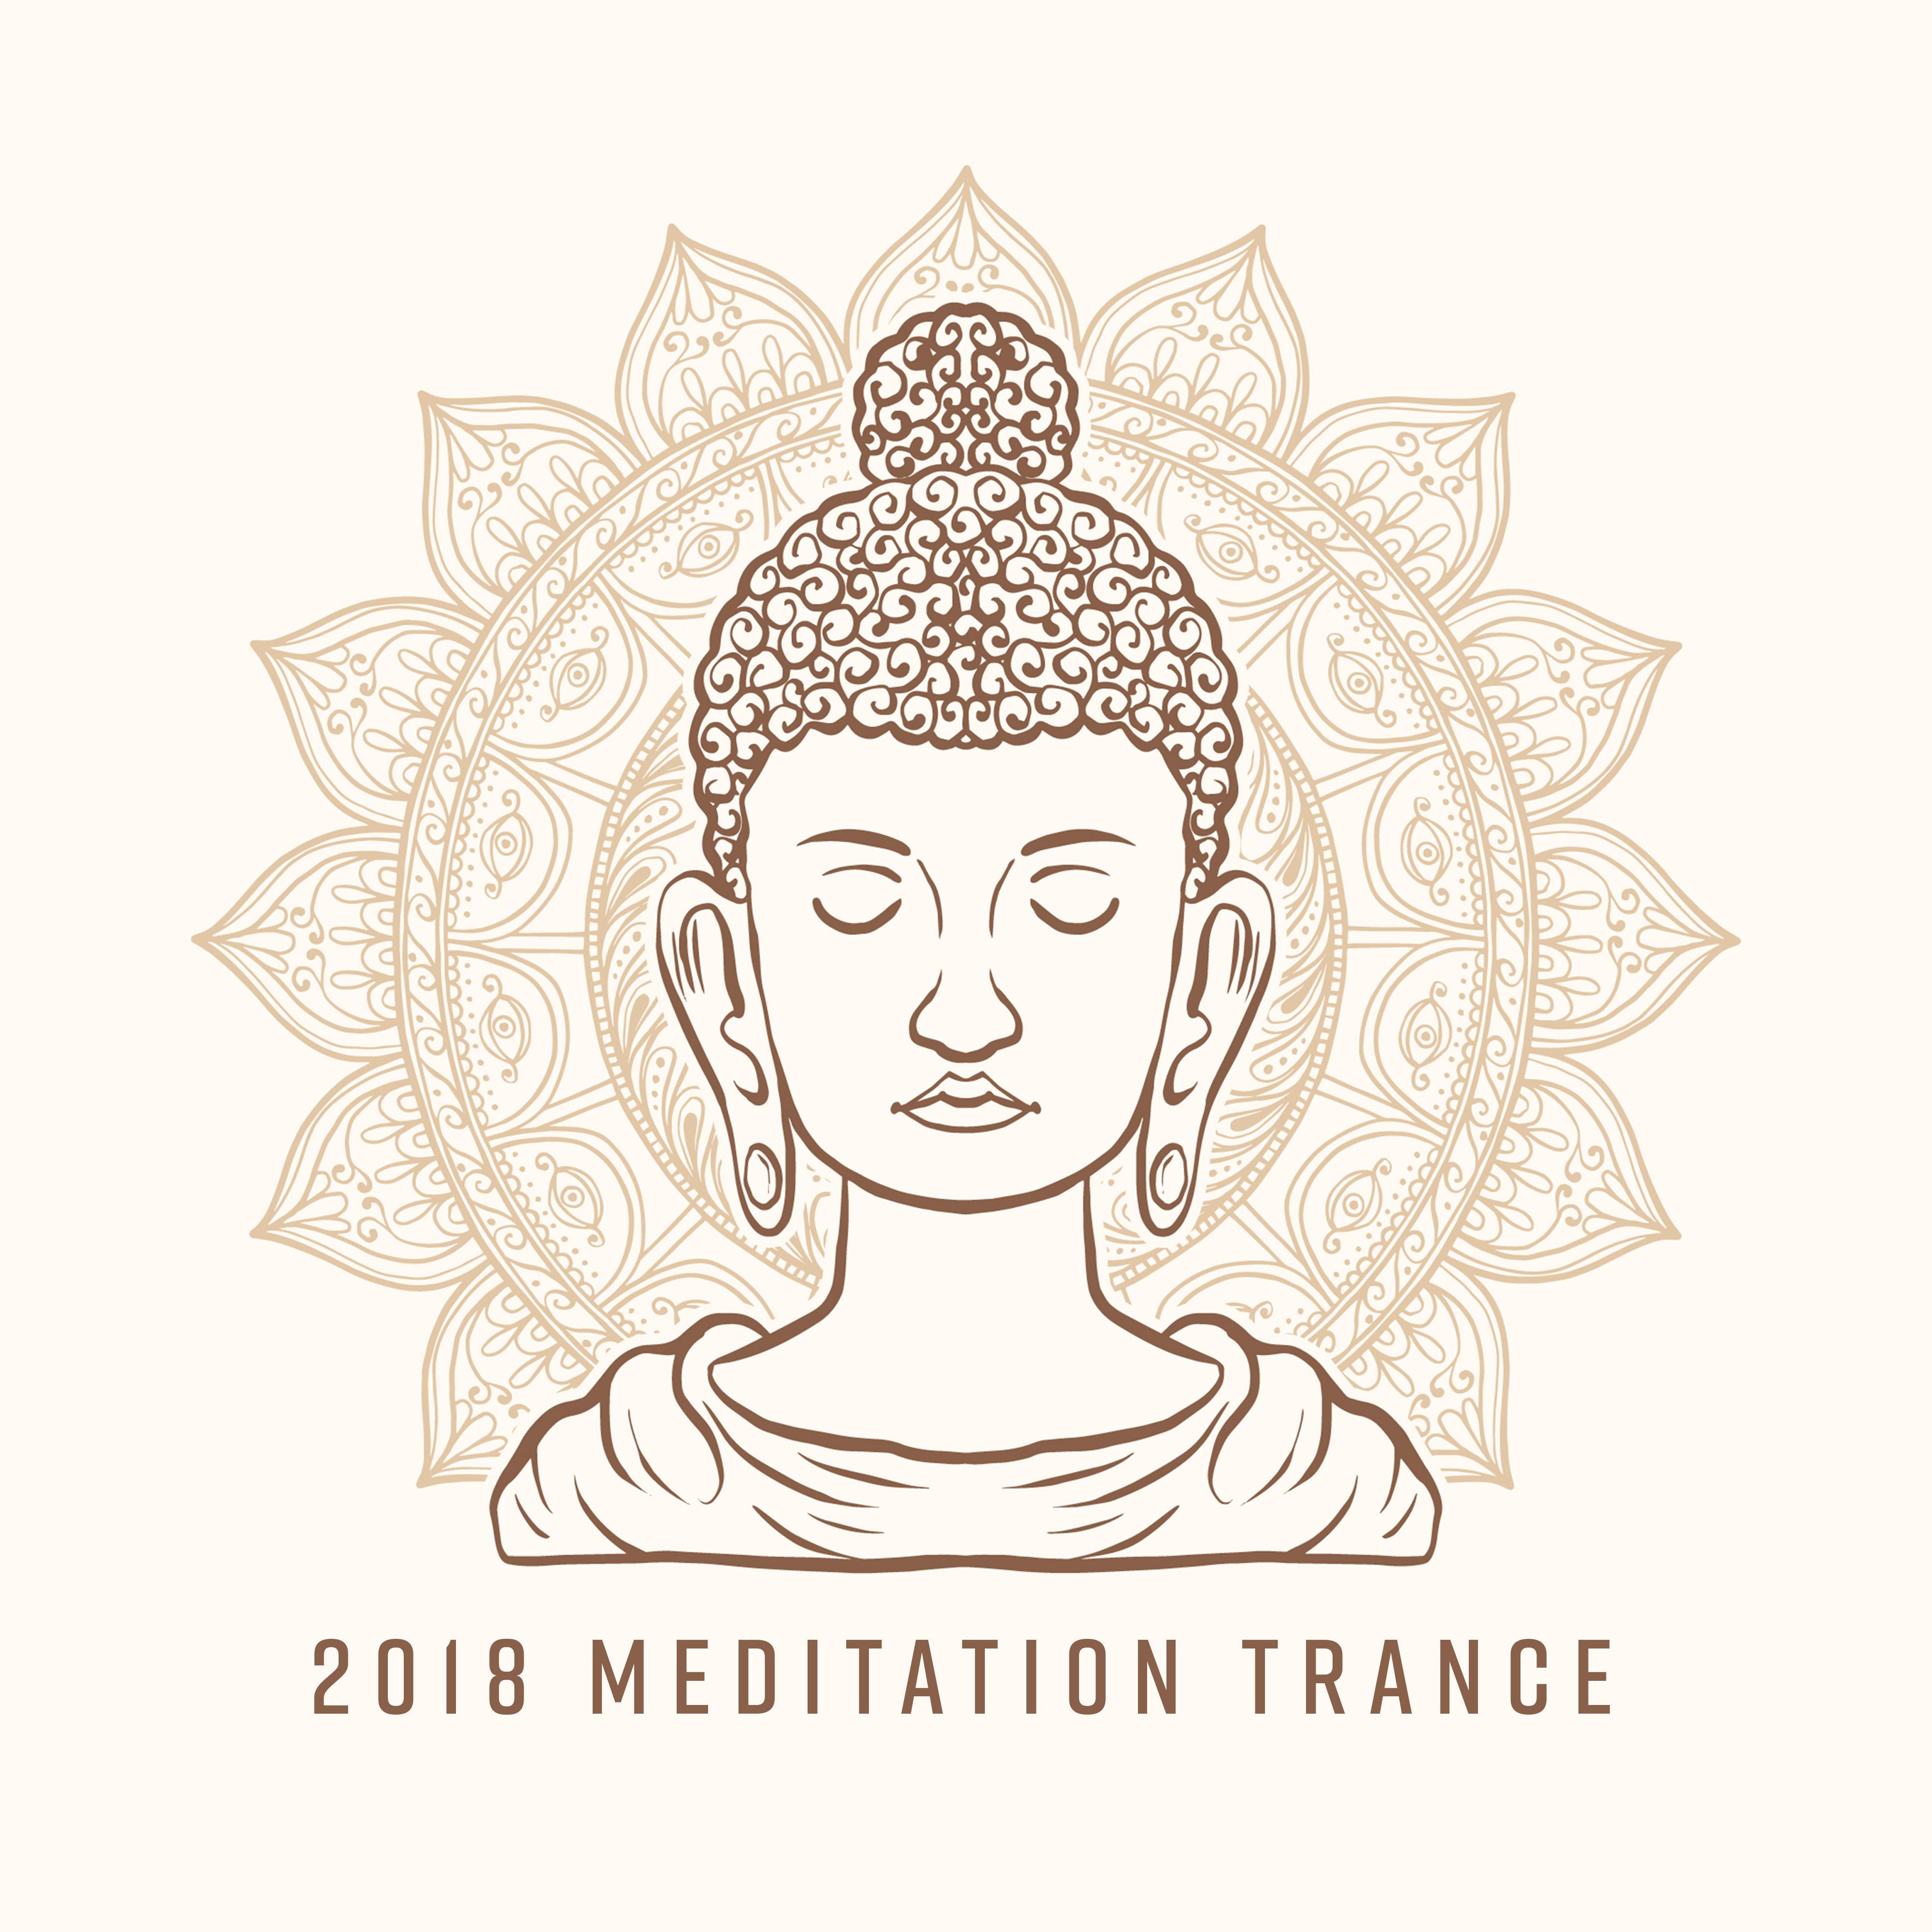 2018 Meditation Trance